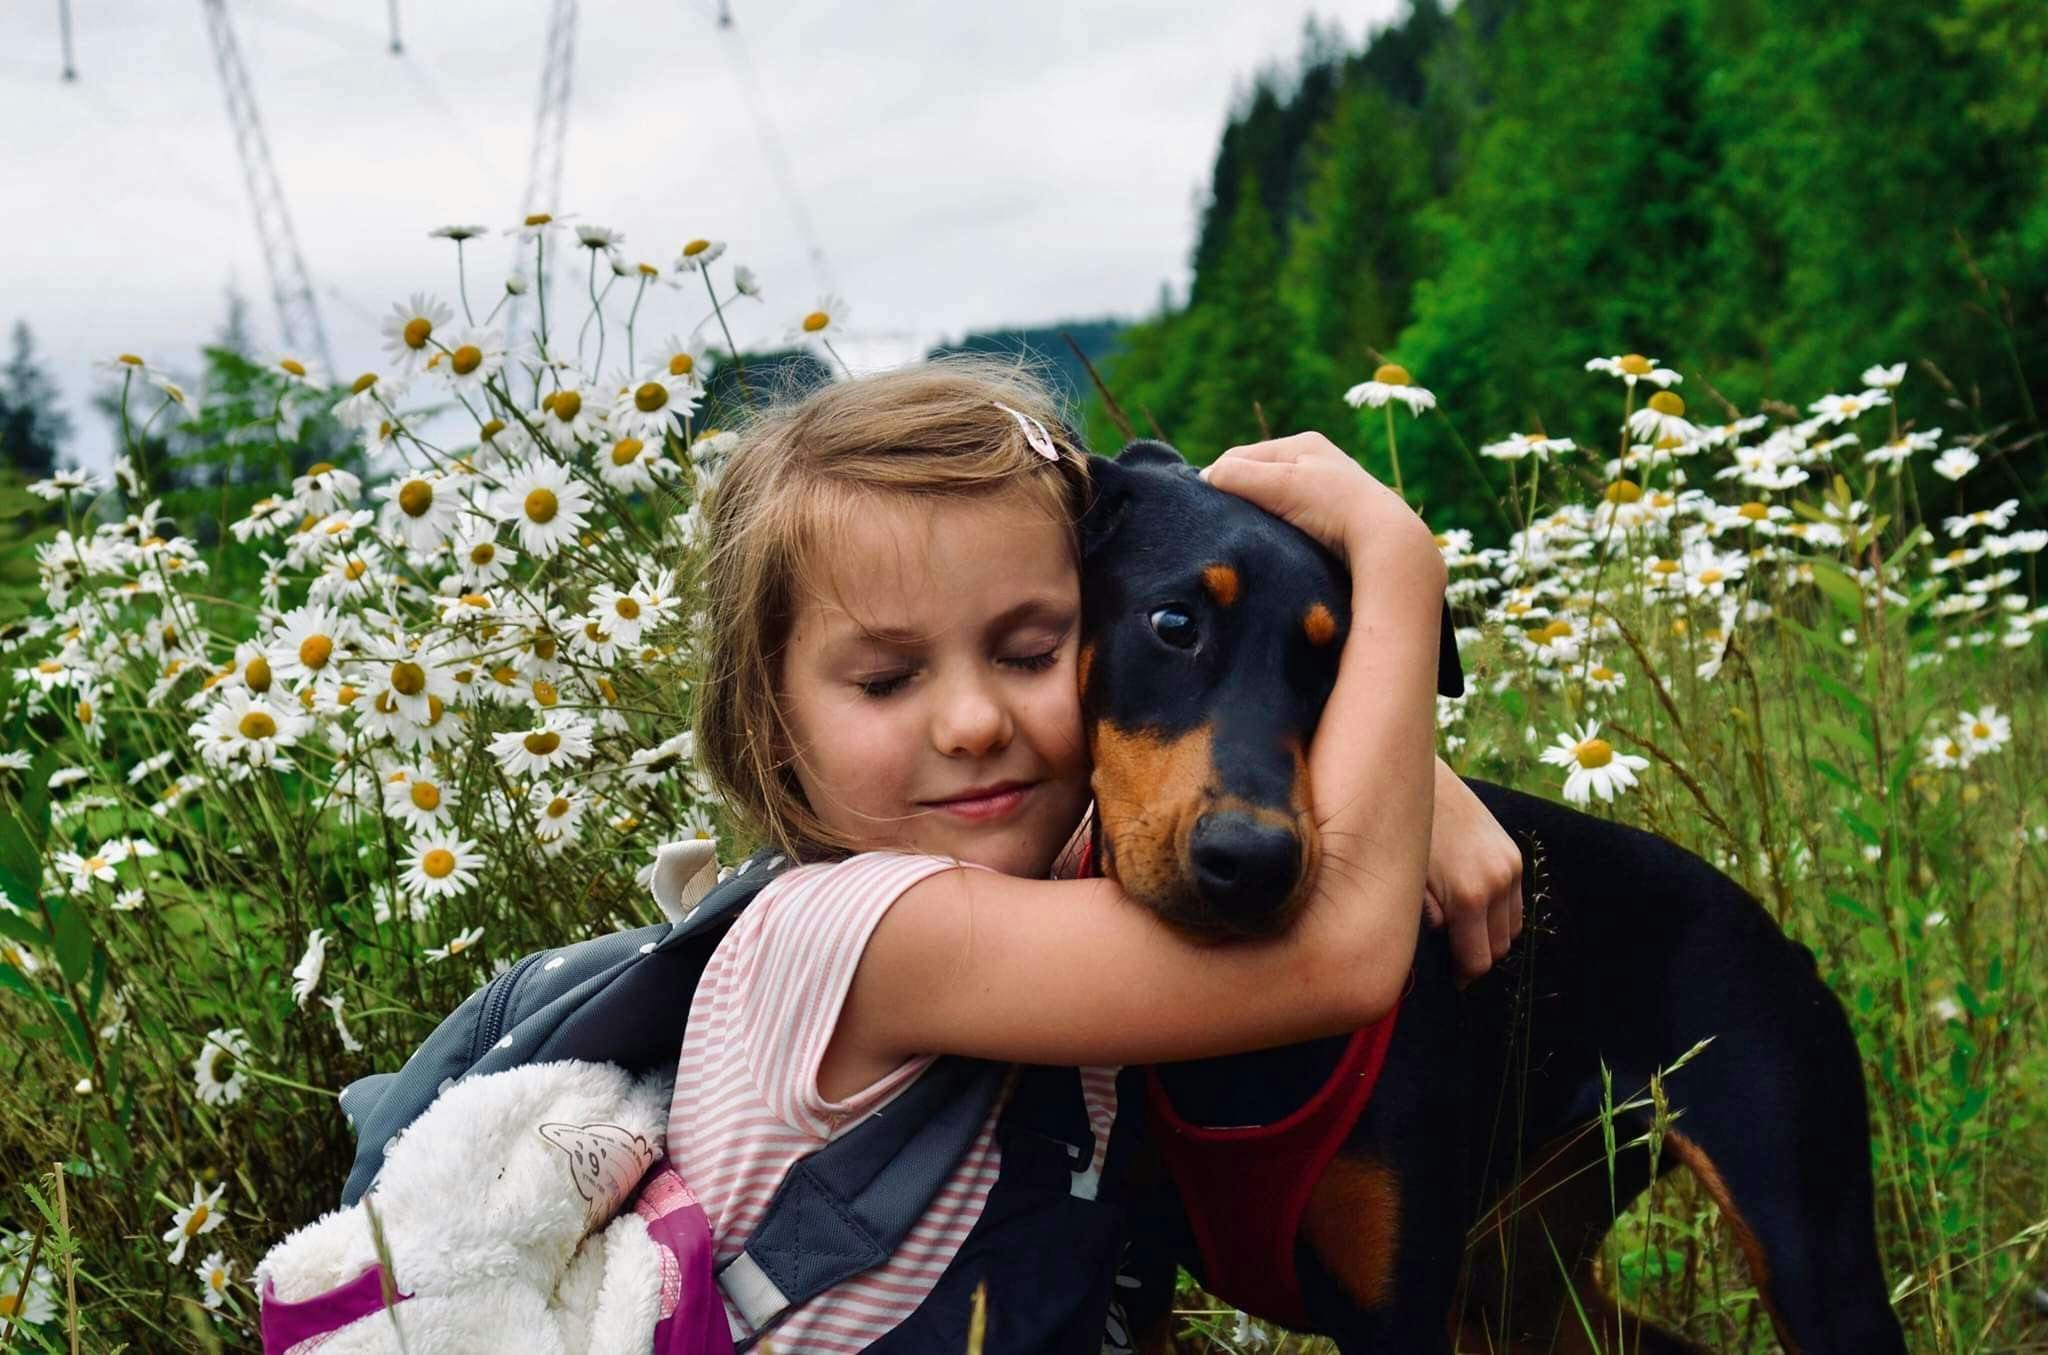 Young girl with Doberman dog